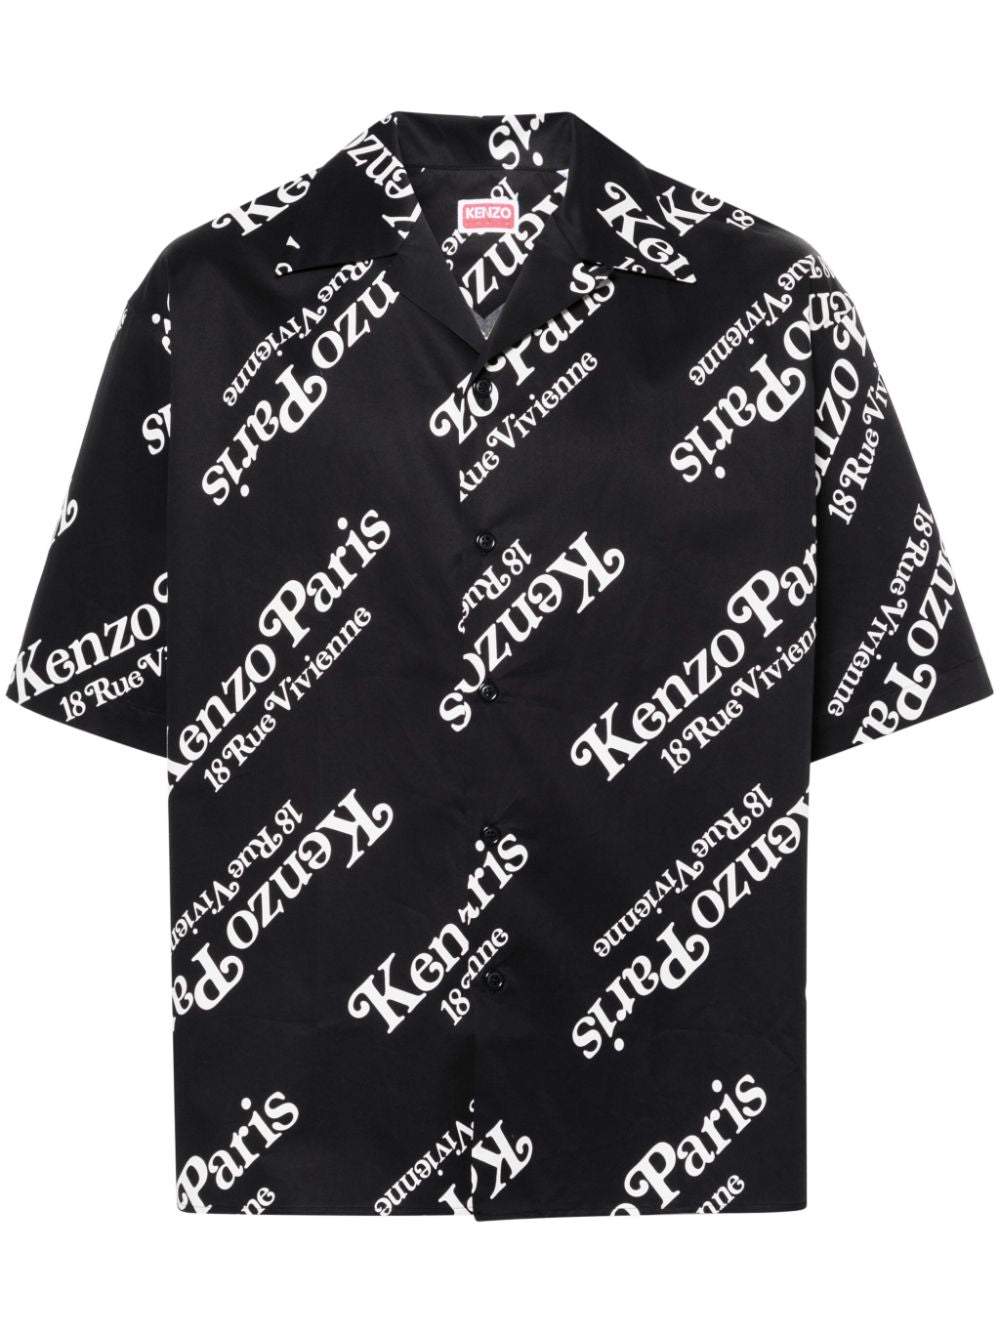 Kenzo By Verdy logo-print shirt<BR/><BR/><BR/>